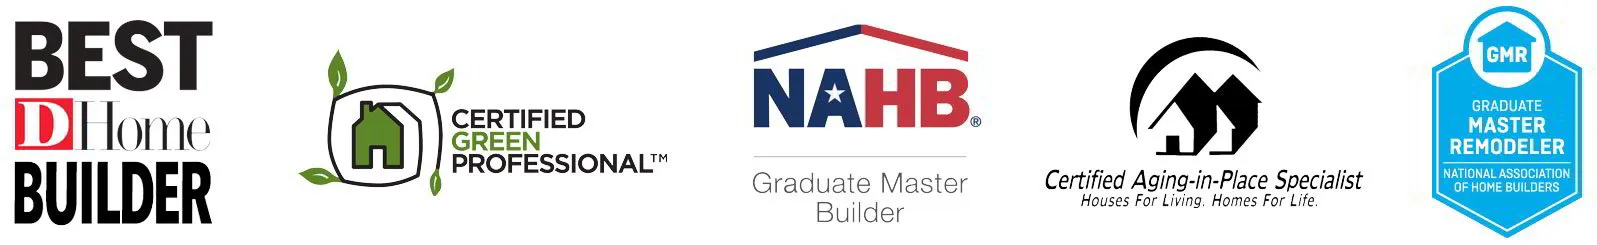 Homebuilder Certifications, Best Builder Dallas TX